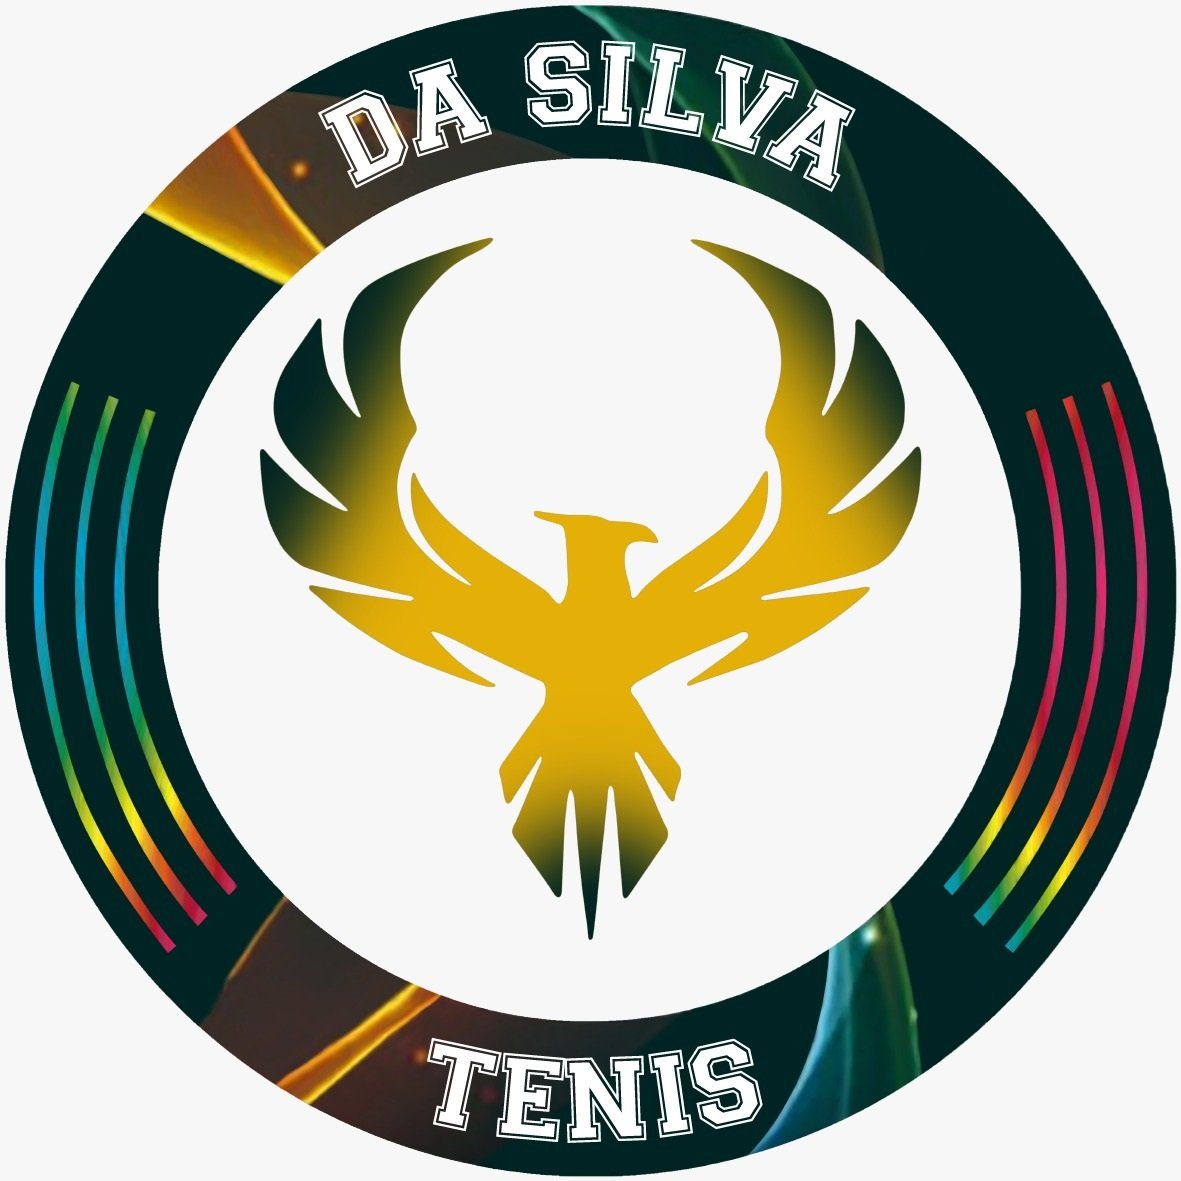 Club Deportivo Da Silva Tenis